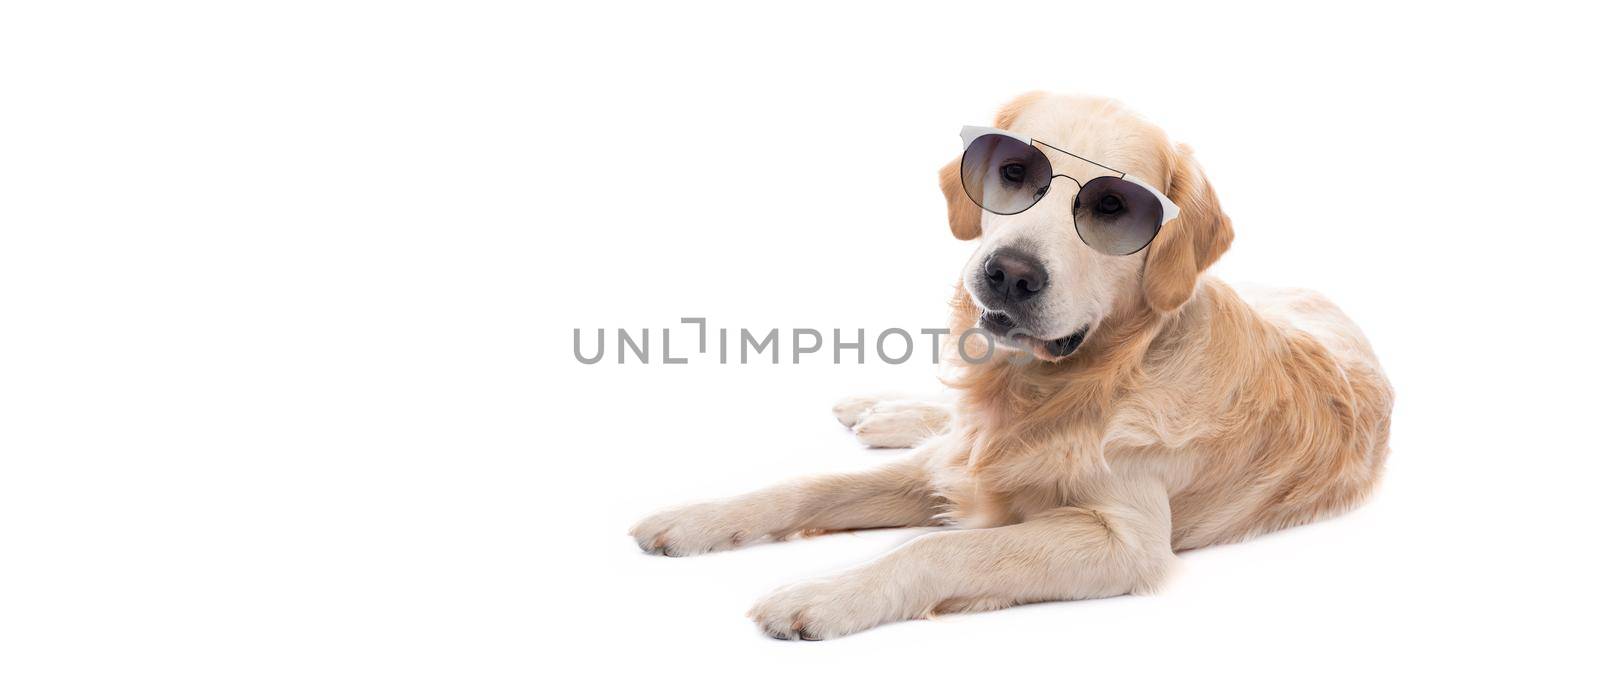 Golden retriever dog in sunglasses resting isolated on white background